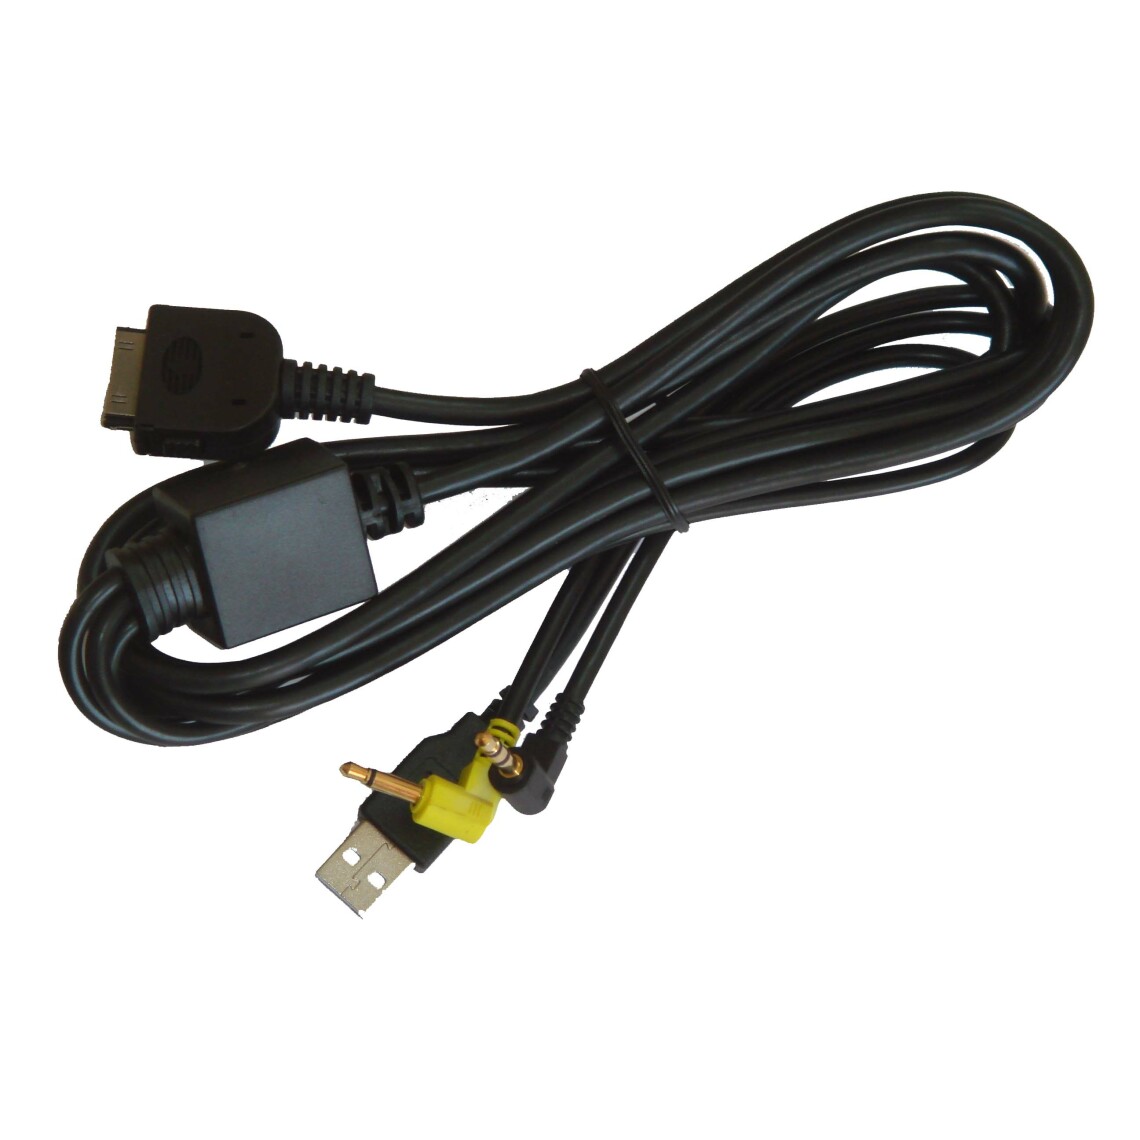 Vhbw - vhbw Câble adaptateur de ligne AUX Radio compatible avec Kenwood KVT-532DVDM, KVT-534DVDM, KVT-54DVDR, KVT-554DVD, KVT-719DVD voiture - USB, AV - Alimentation modulaire